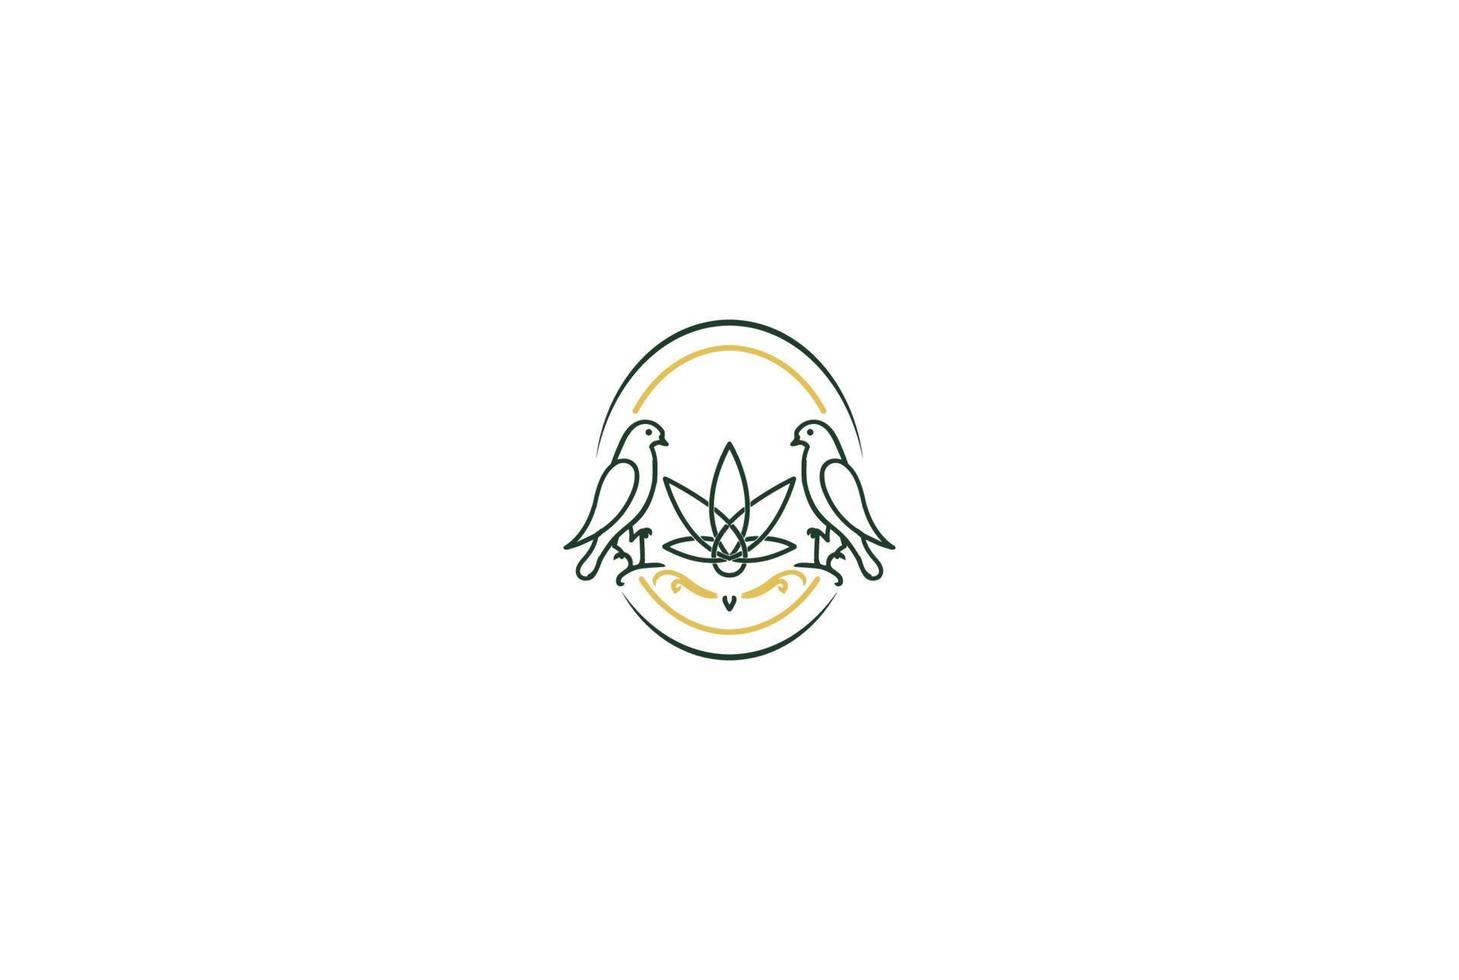 Vintage Retro Bird with Cannabis Marijuana Ganja Leaf for CBD Oil Extract Logo Design Vector